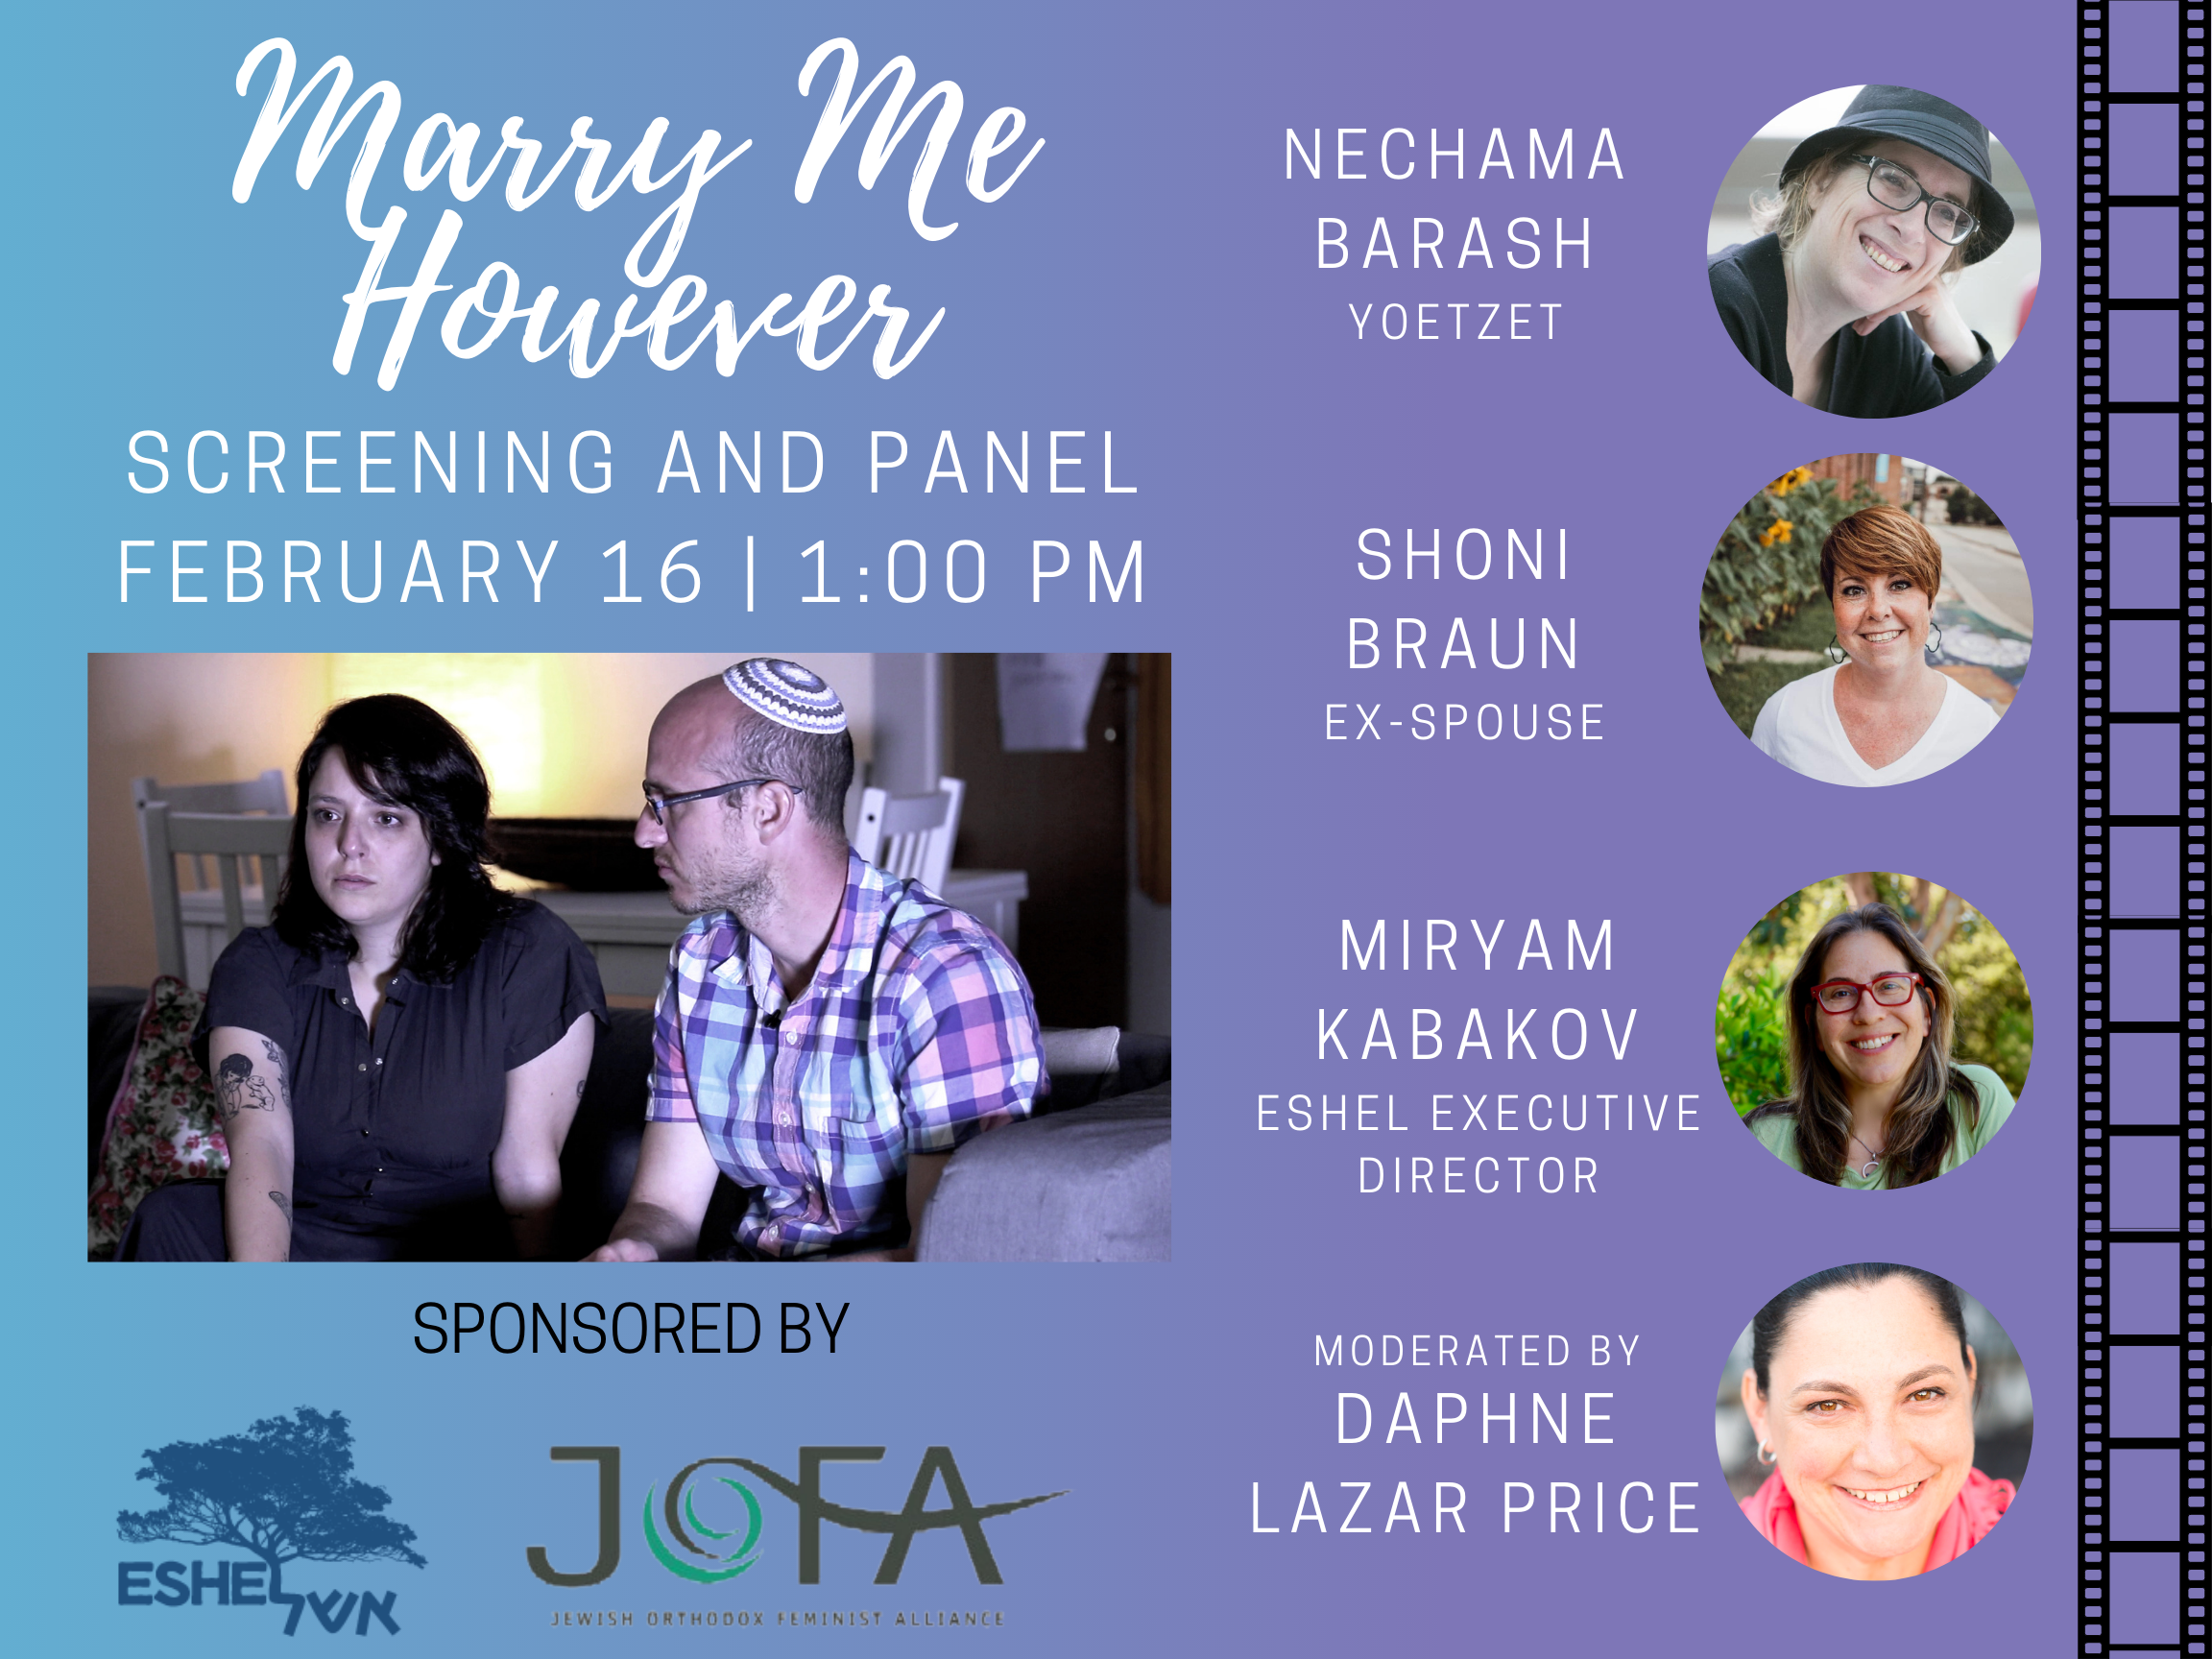 JOFA Marry Me However Film Screening and Panel February 16 1:00 pm Sponsored by Eshel and JOFA